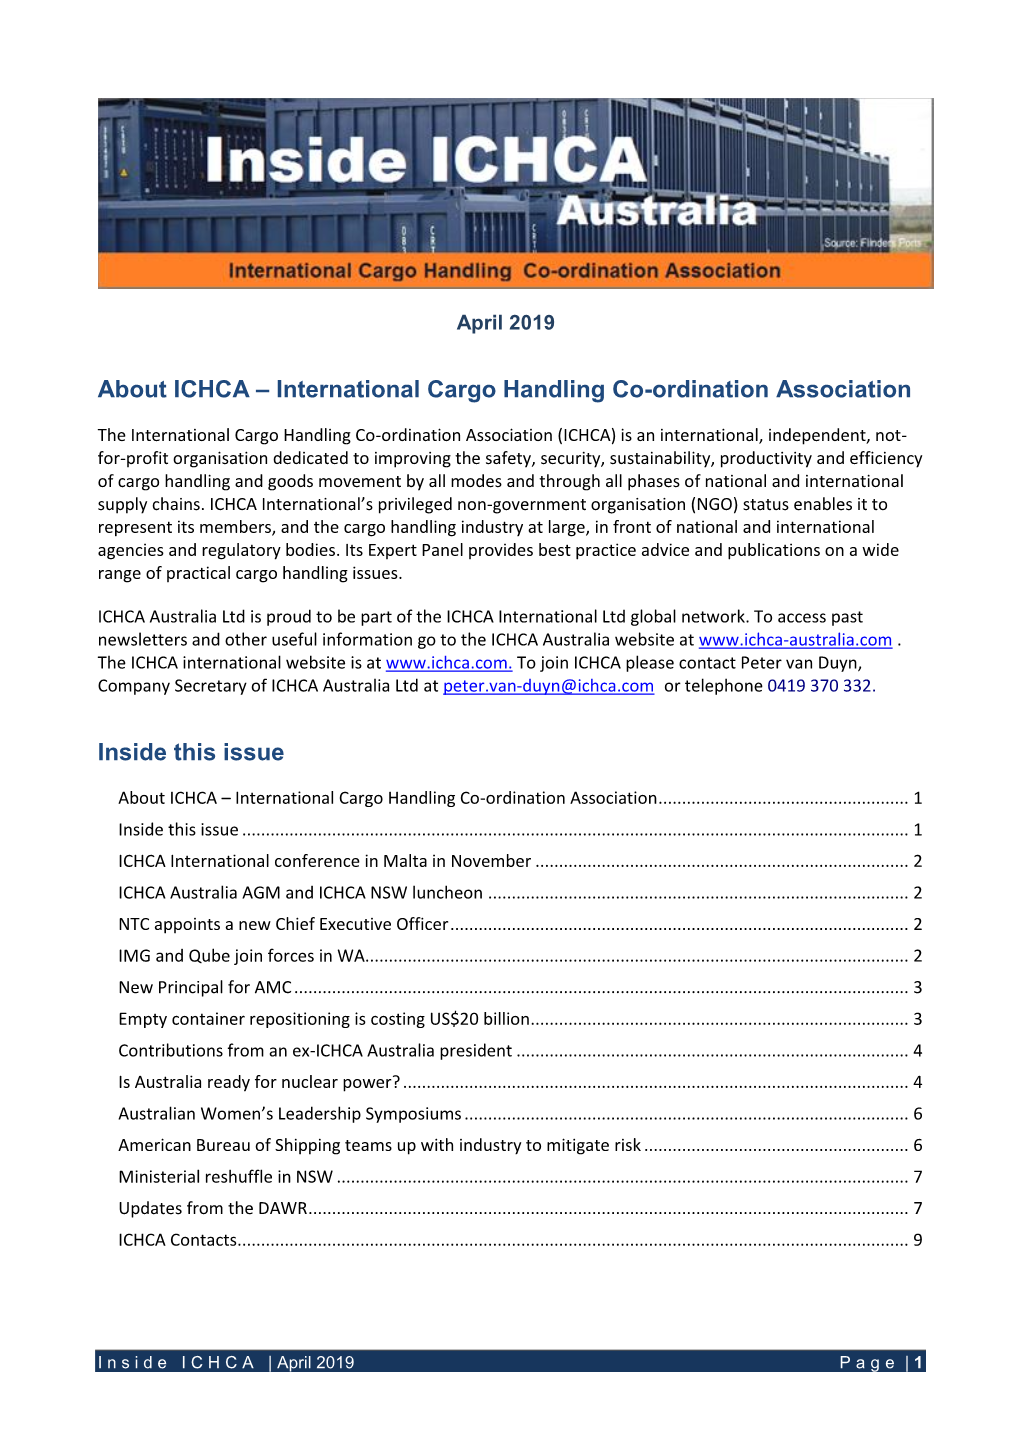 About ICHCA – International Cargo Handling Co-Ordination Association